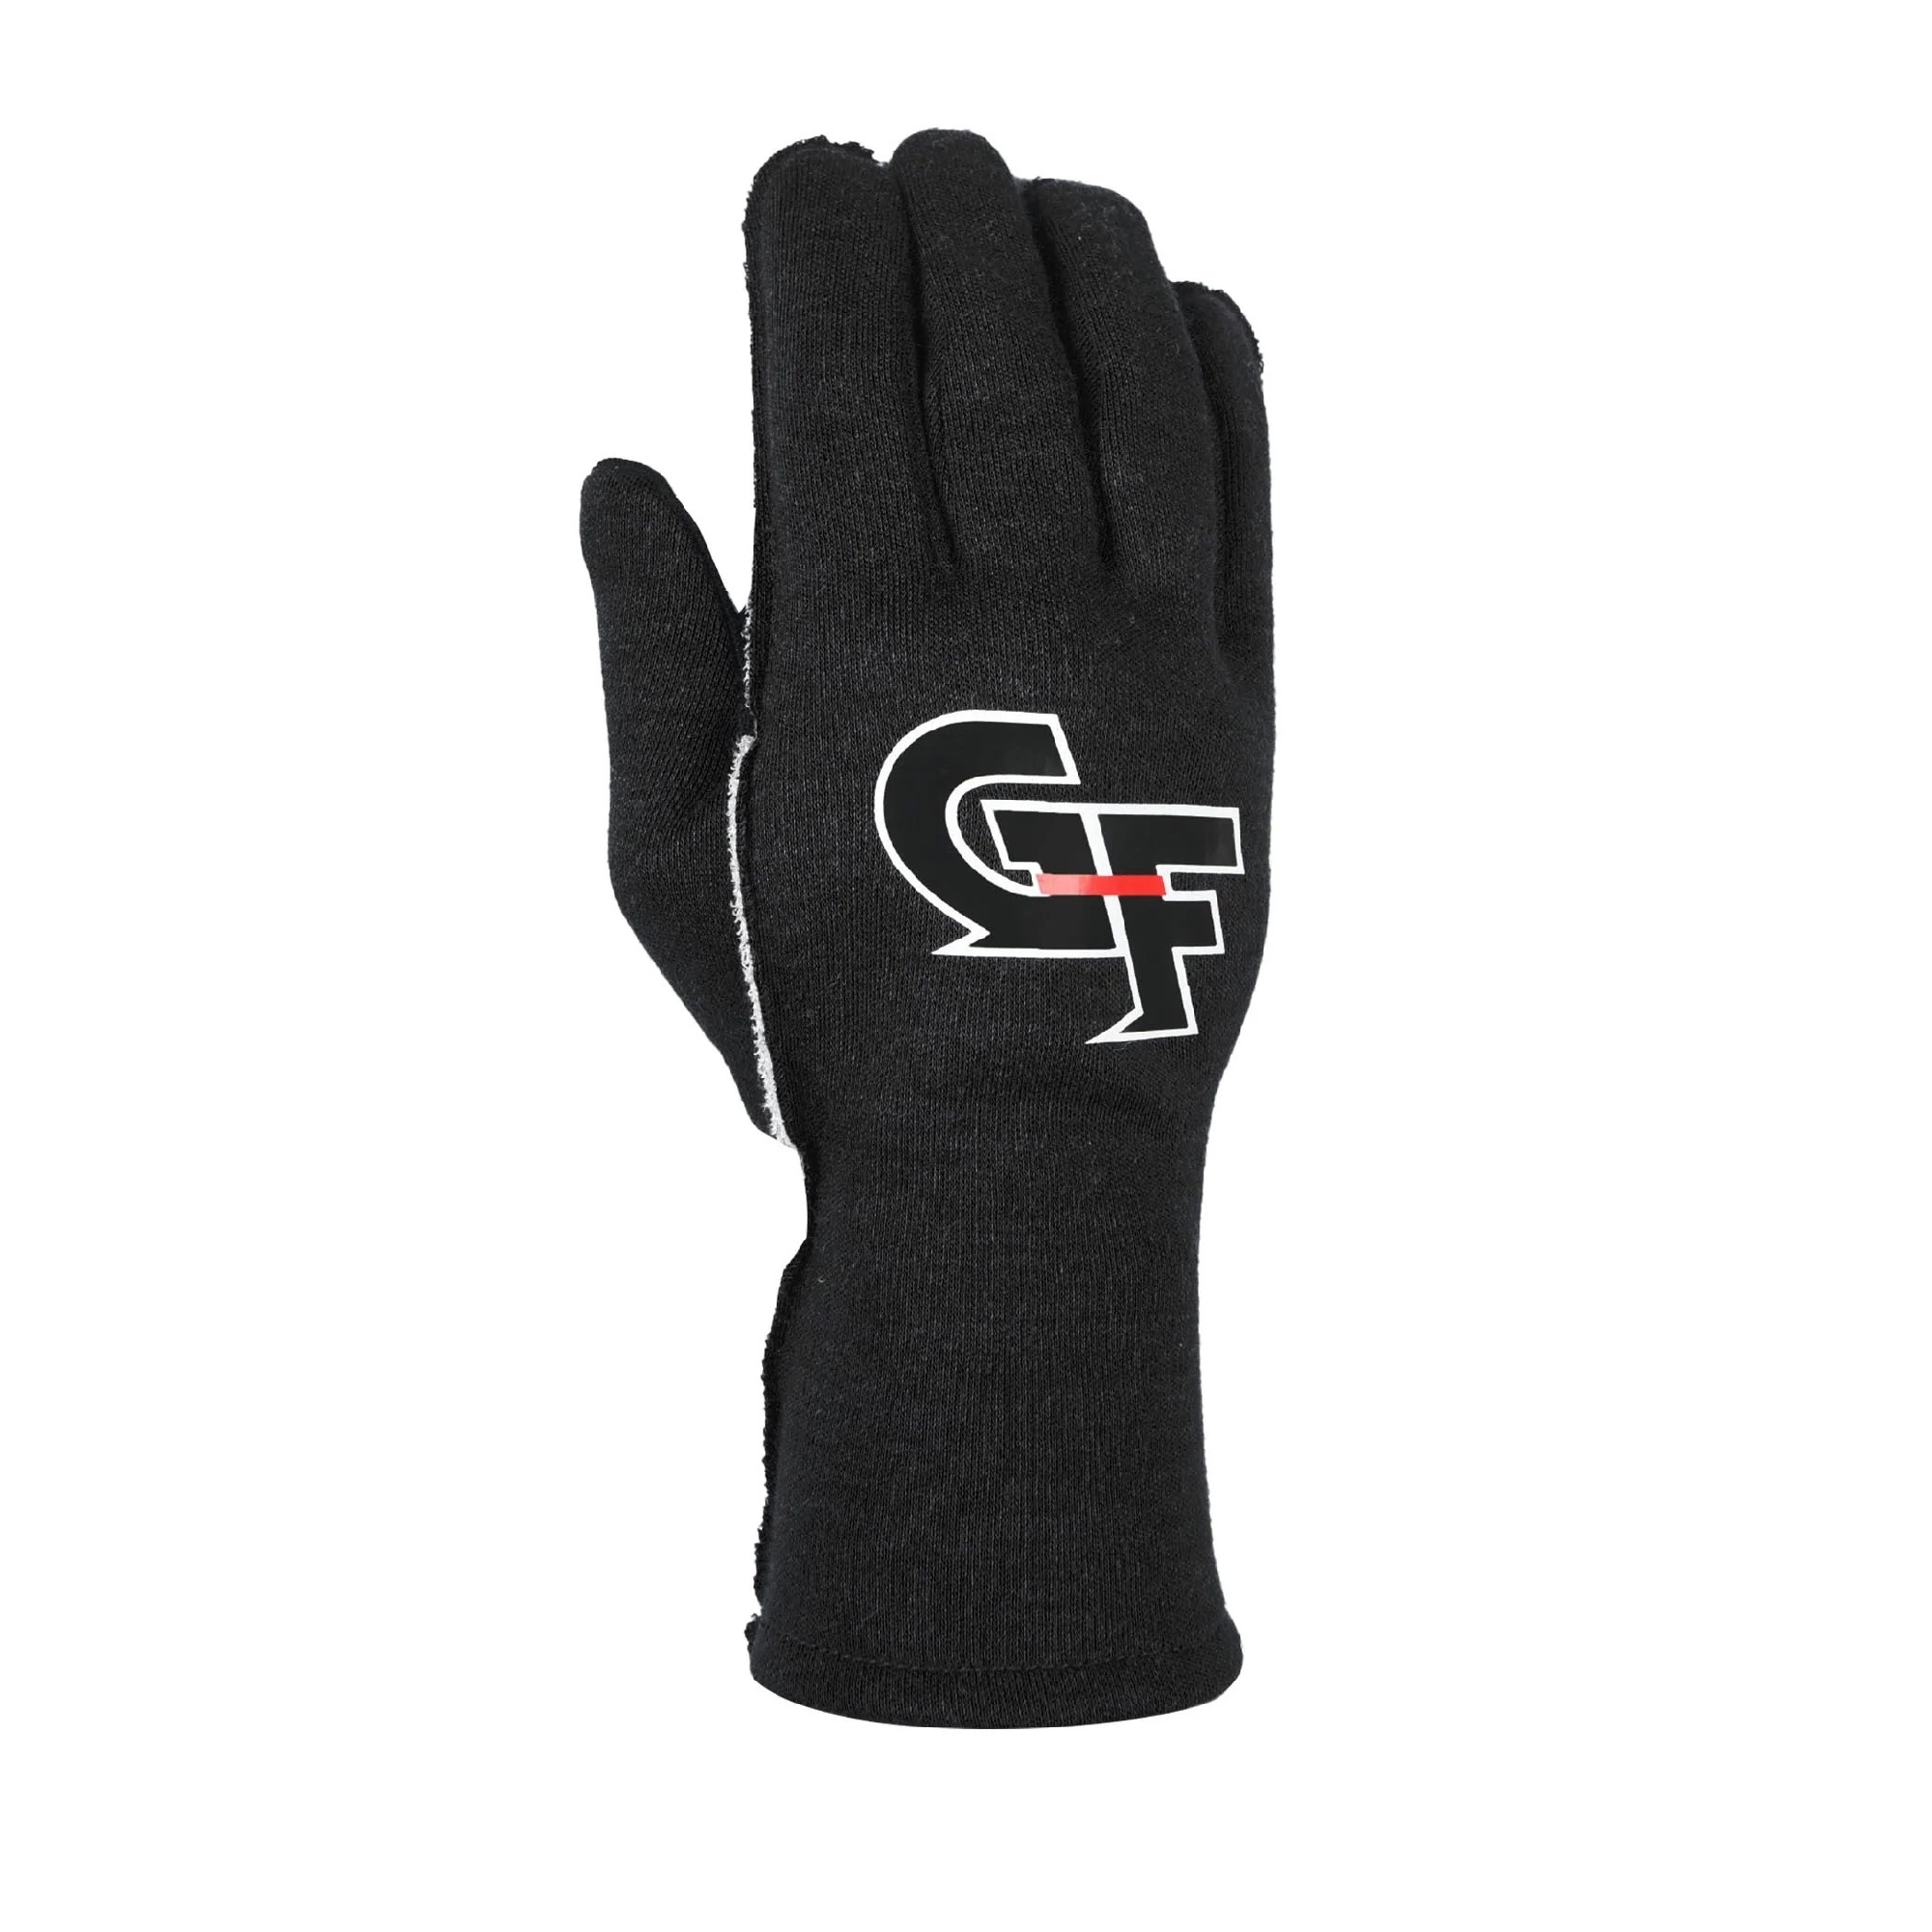 G-FORCE Gloves G-Limit Medium Black